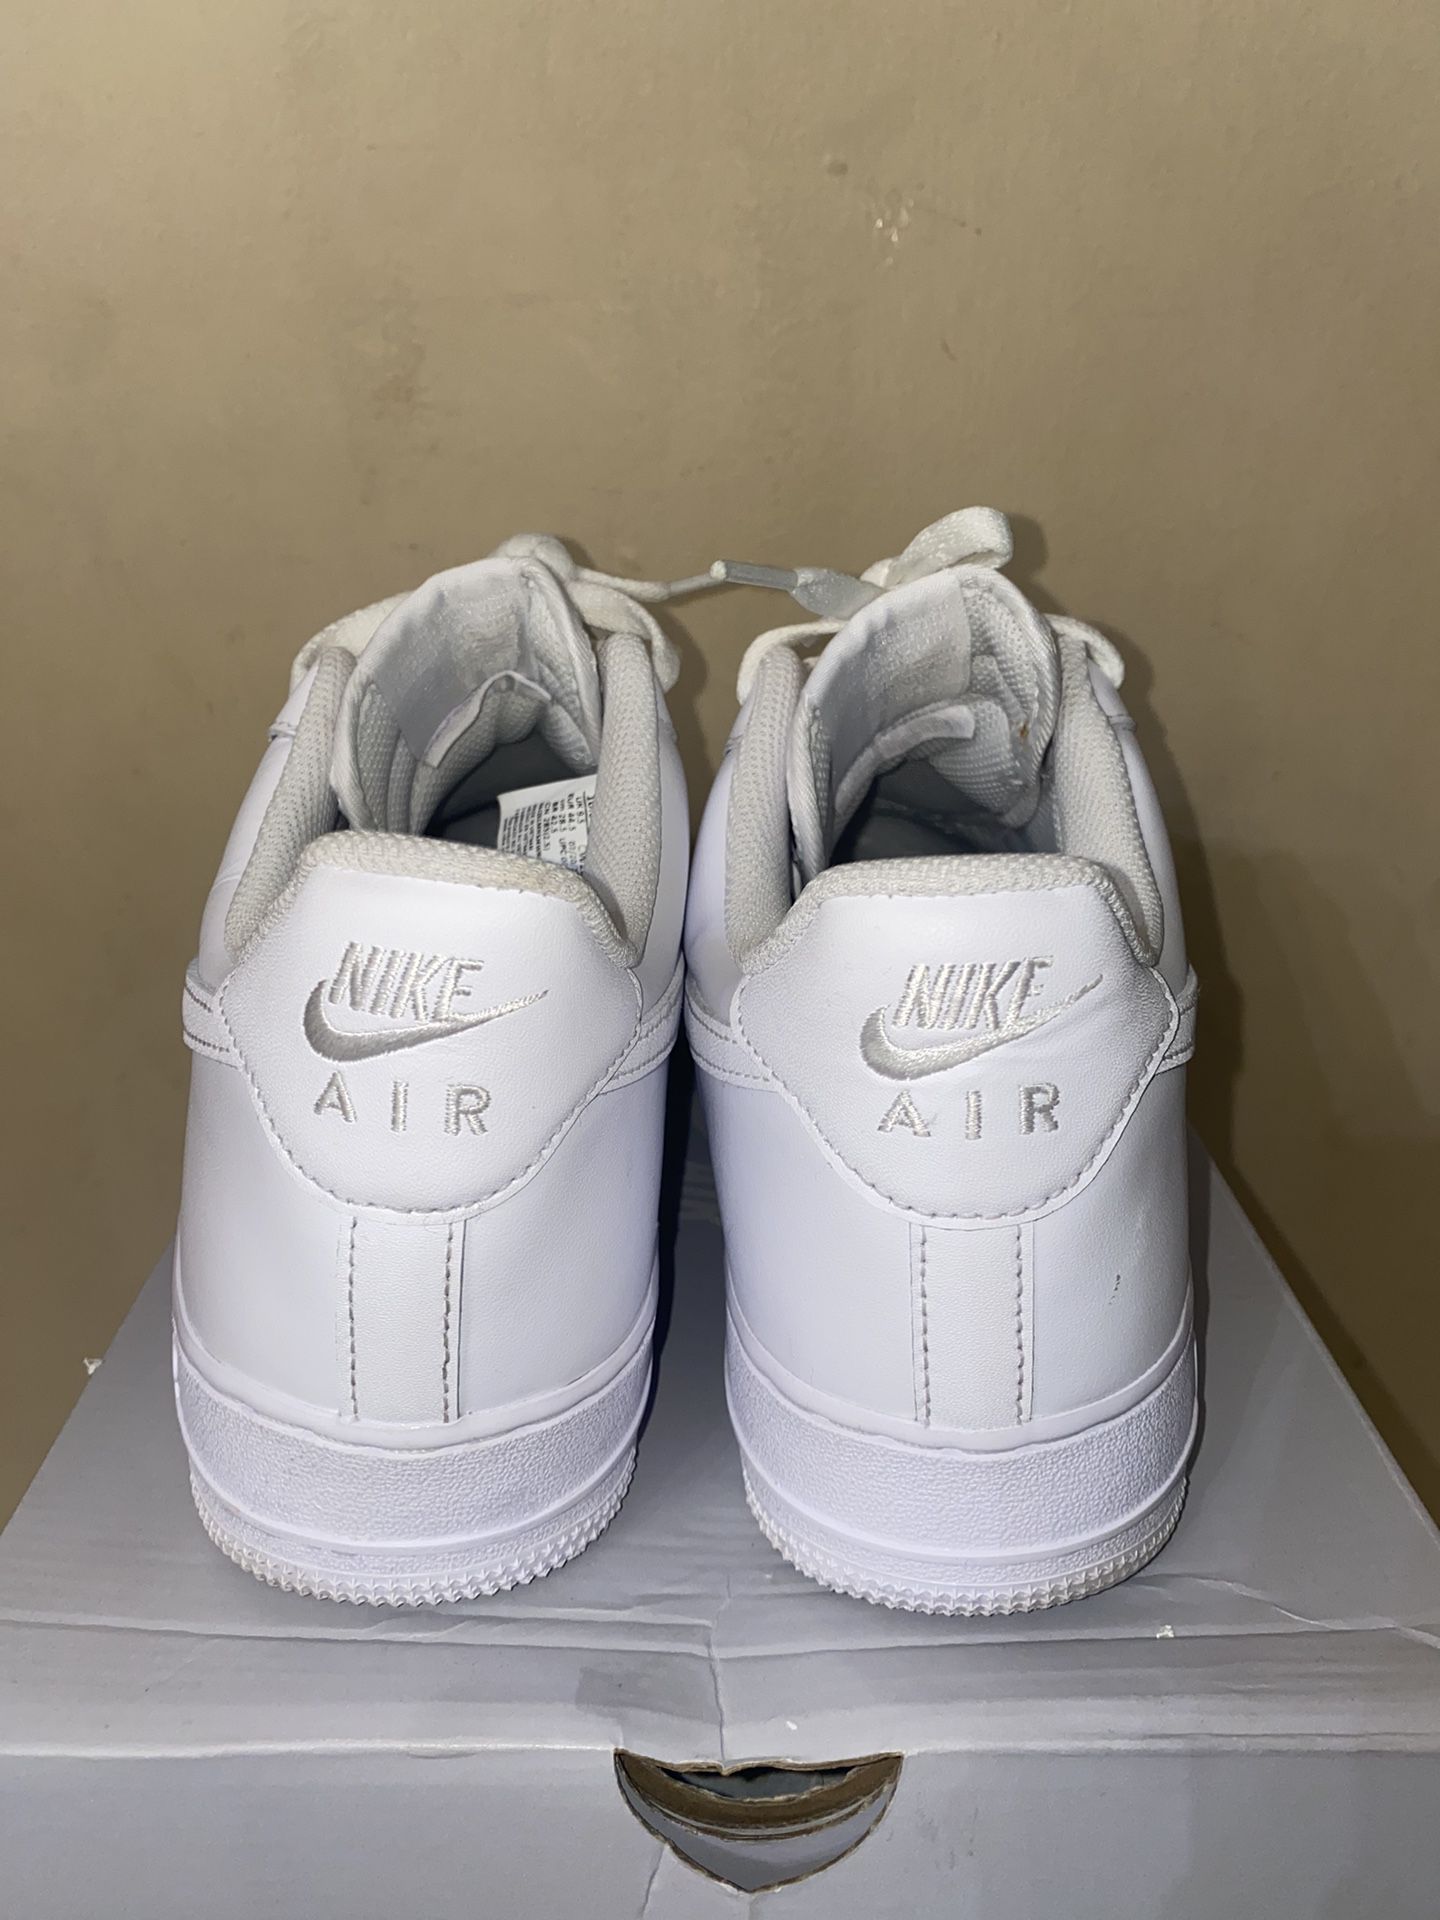 Nike Air Force 1 Size 10.5 White Original Box 